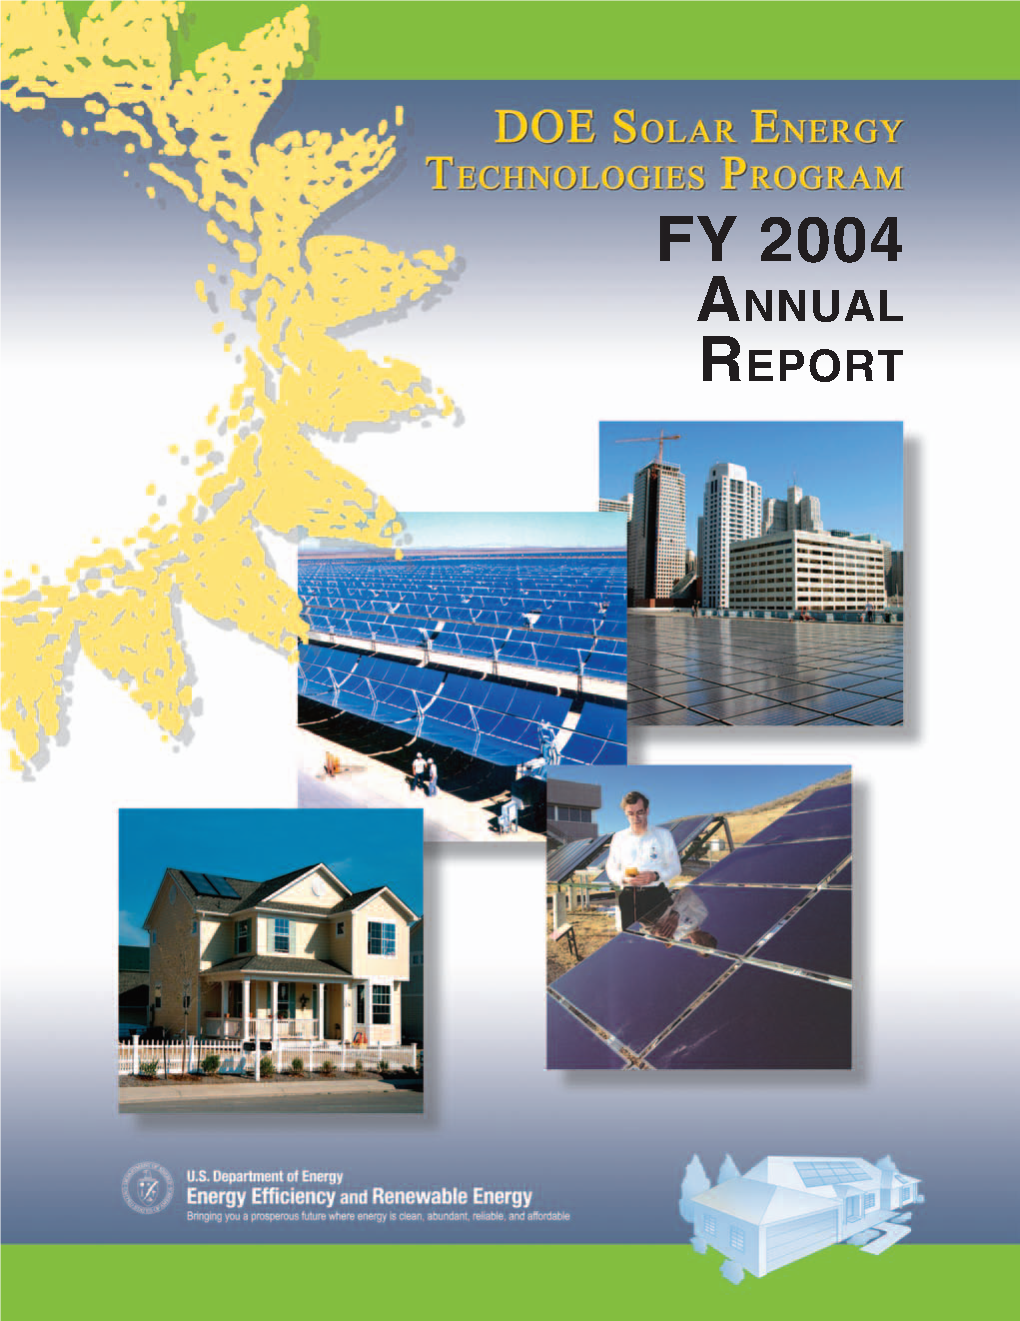 DOE Solar Energy Technologies Program: FY 2004 Annual Report